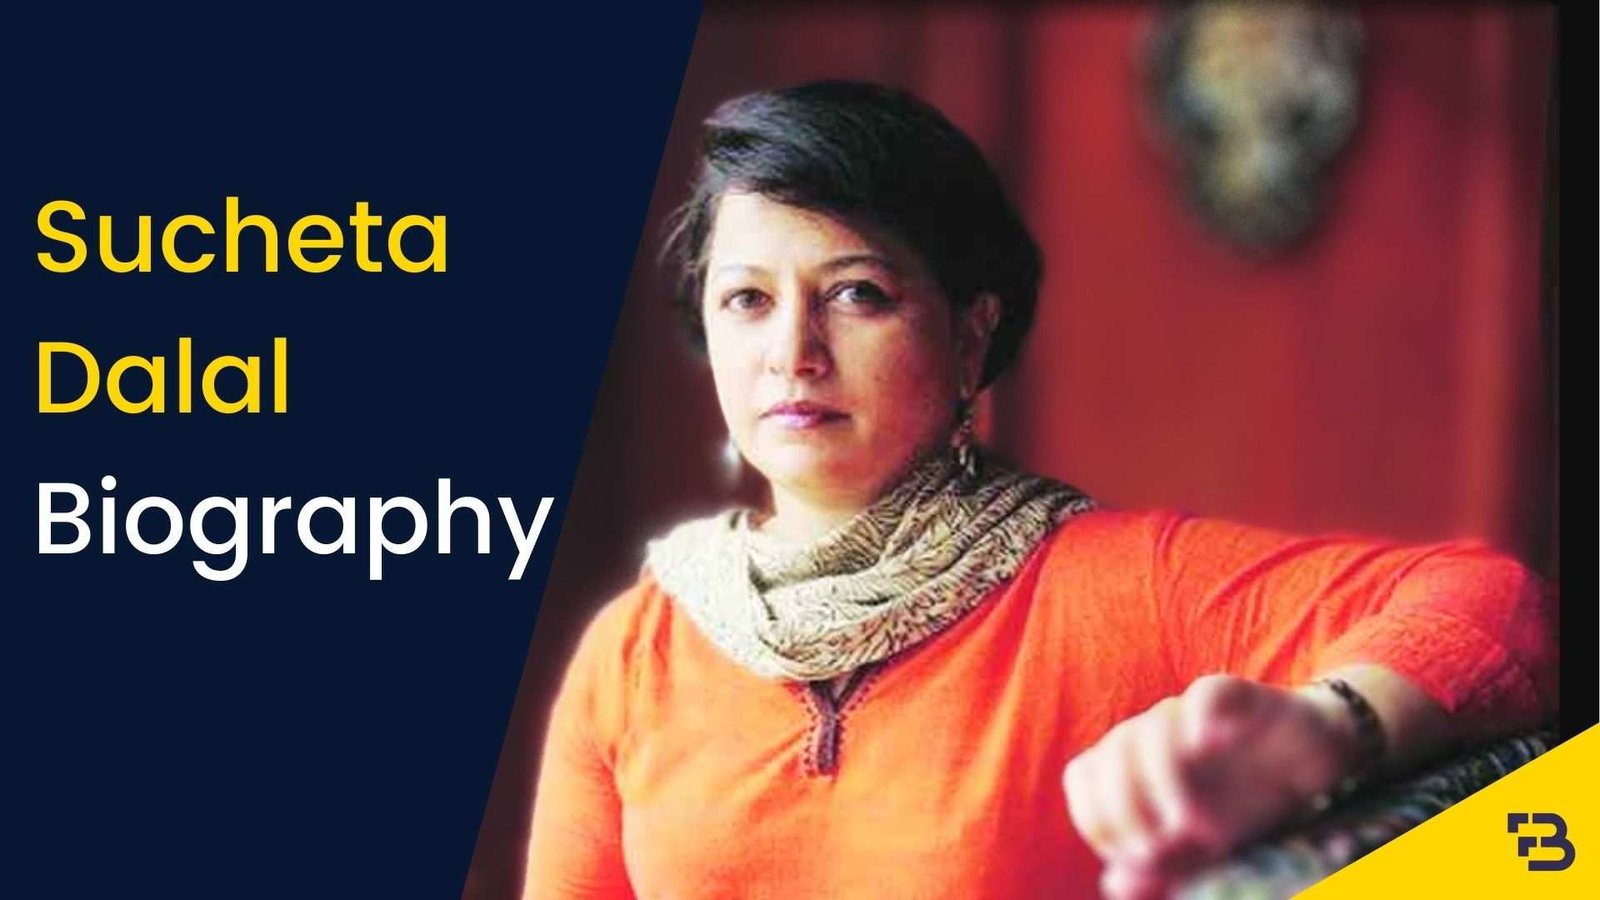 Sucheta Dalal Biography, Husband, Education, Portfolio, Net worth in 2022